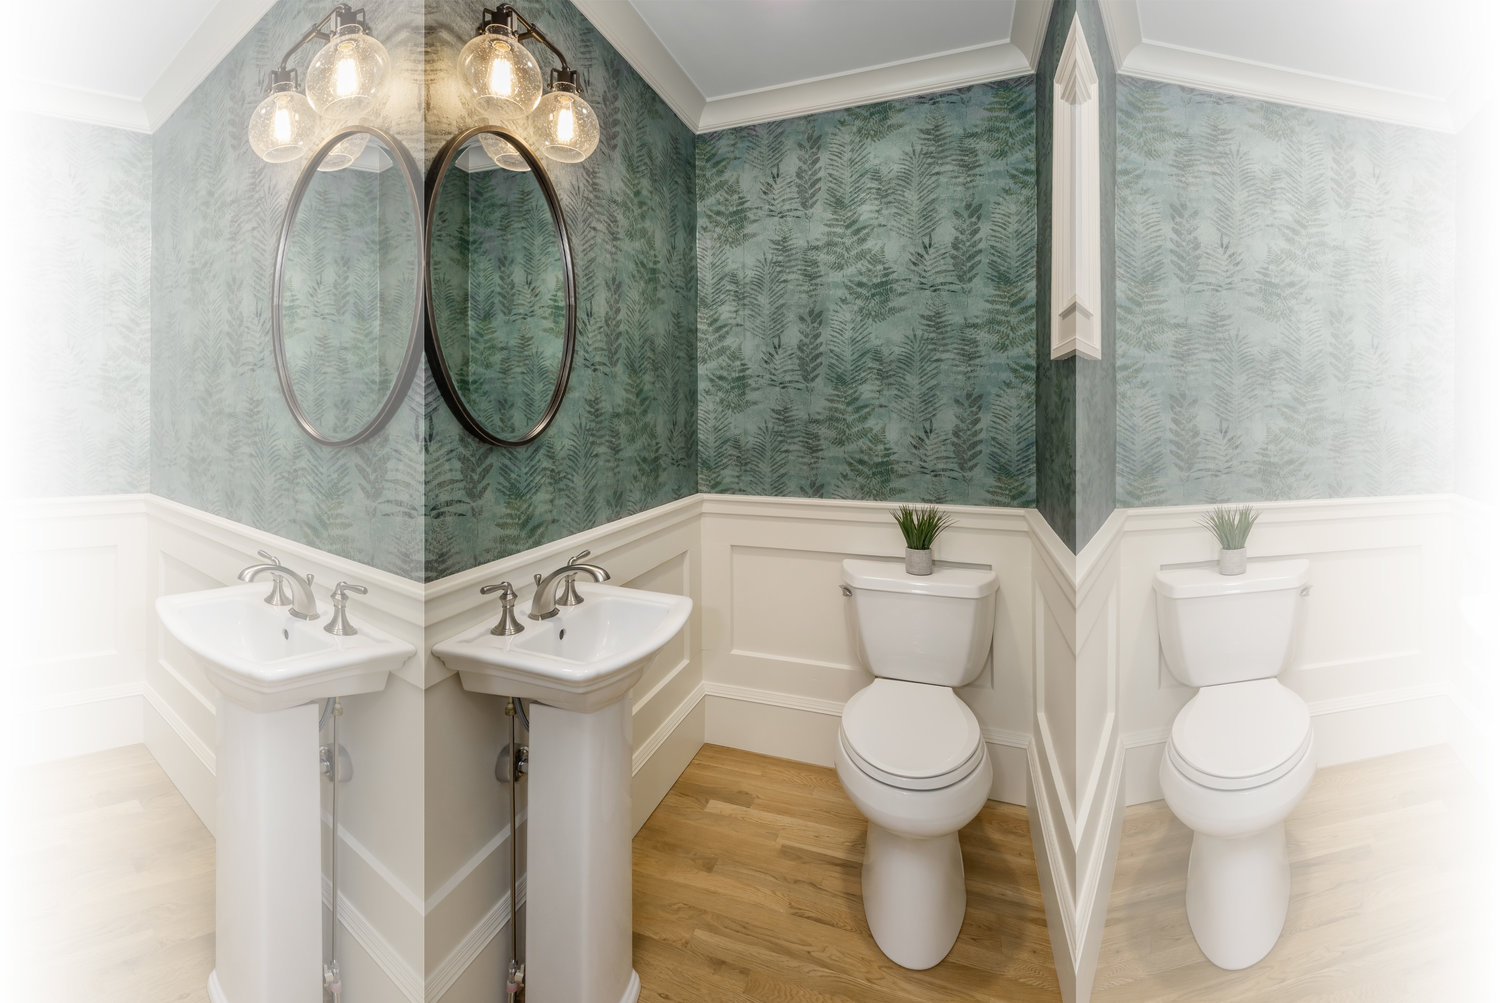 Wallpaper and a round mirror are impactful in the half-bath